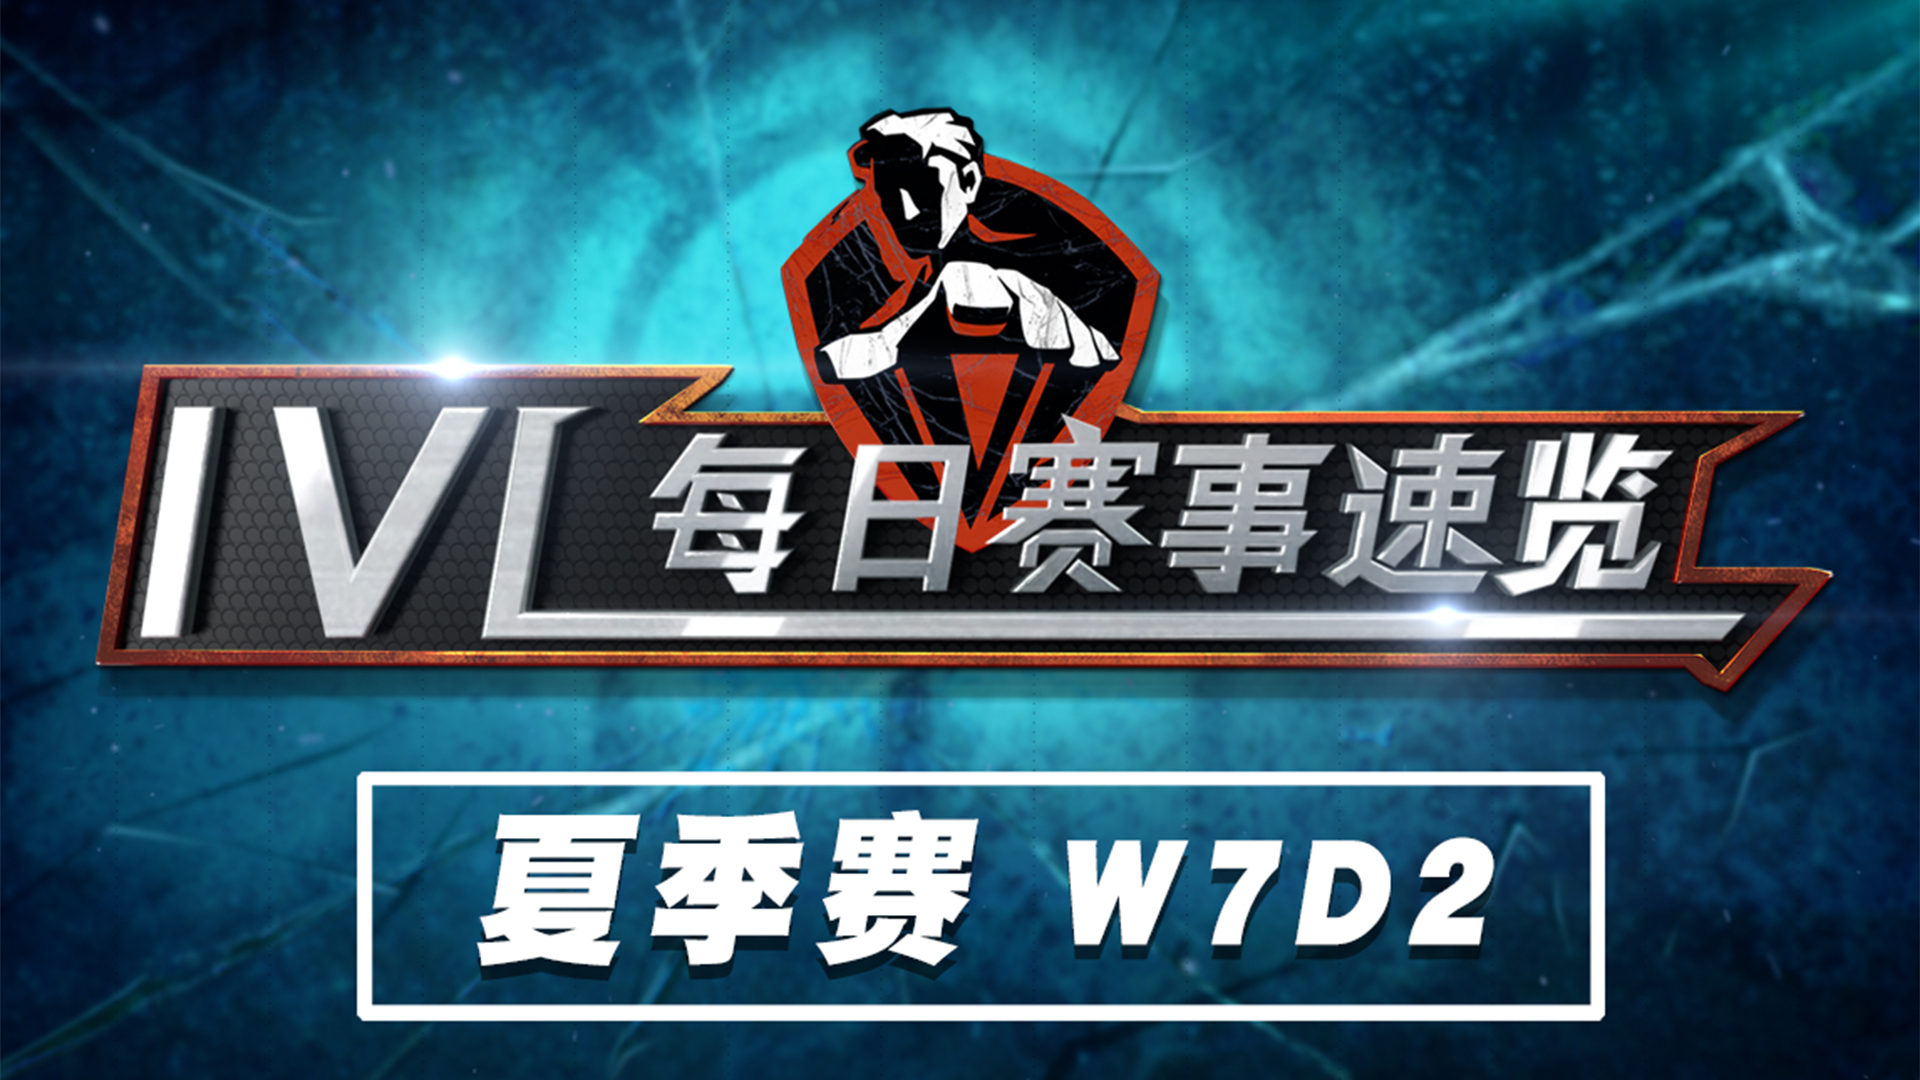 【2020IVL】夏季赛W7D2 赛事速览